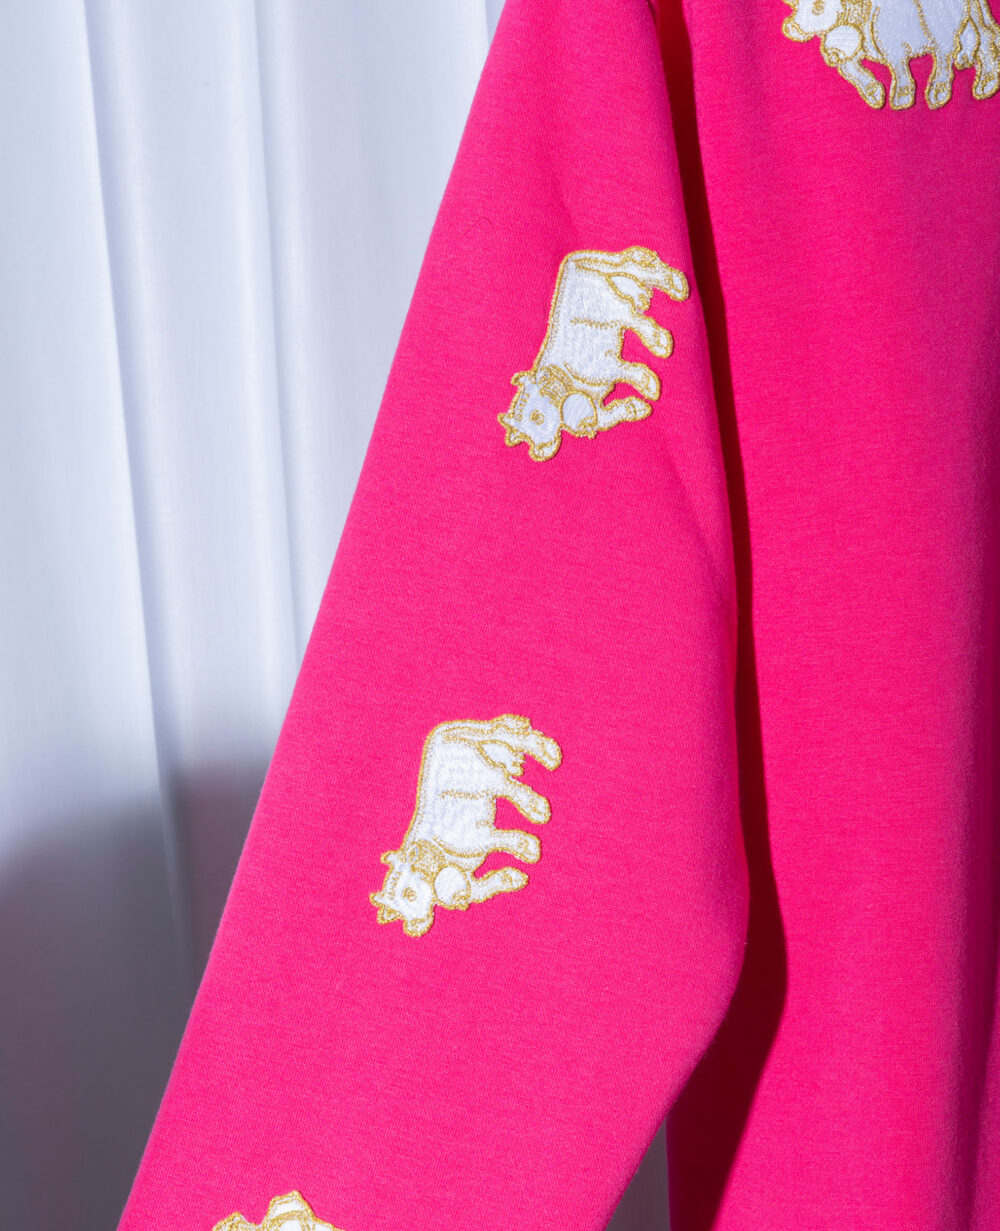 Details Appenzeller Sweater pink | Collab mit Julian Zigerli